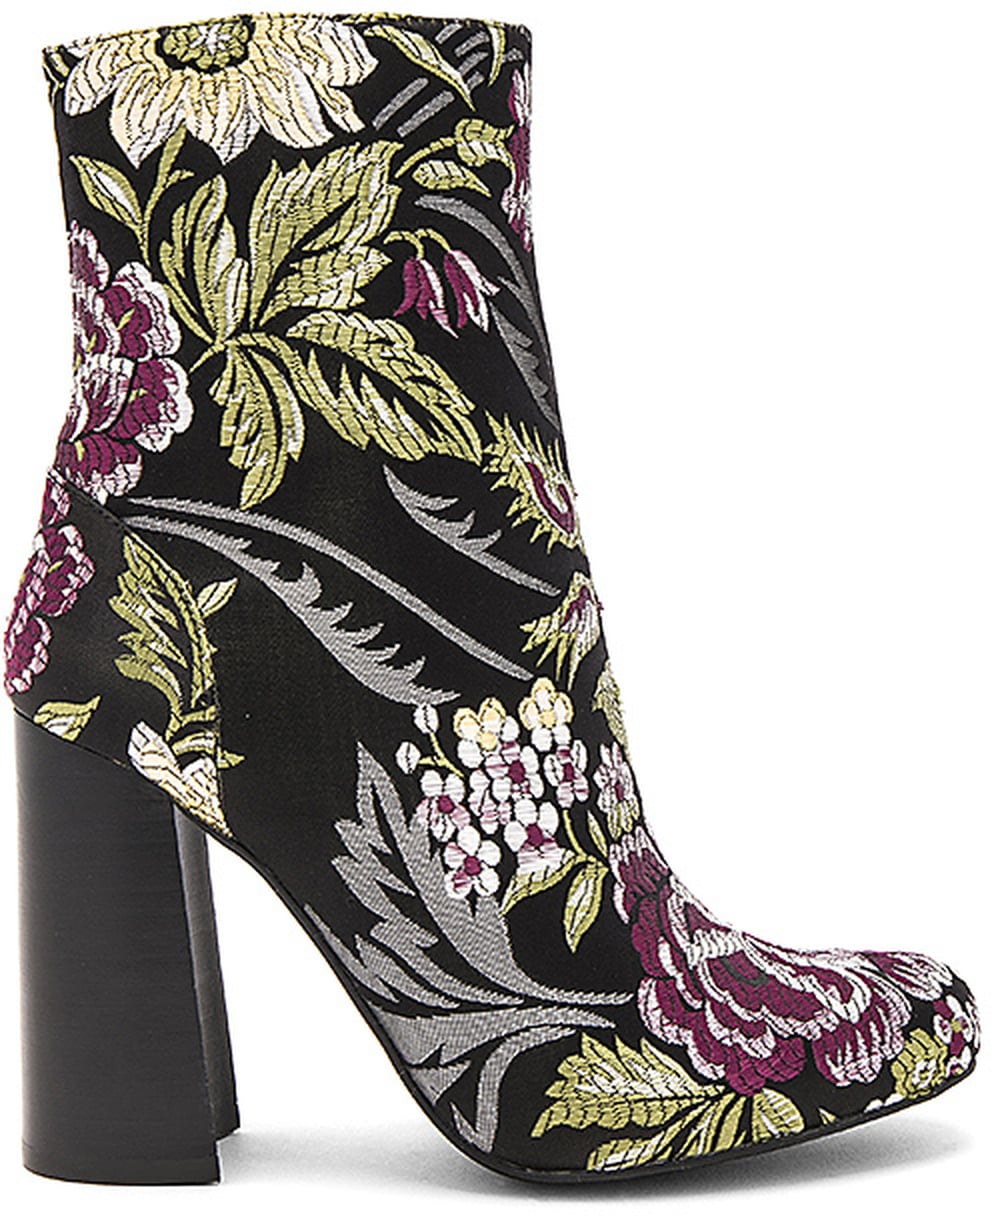 Rosie Huntington Whiteley Christian Louboutin Floral Boots | POPSUGAR ...